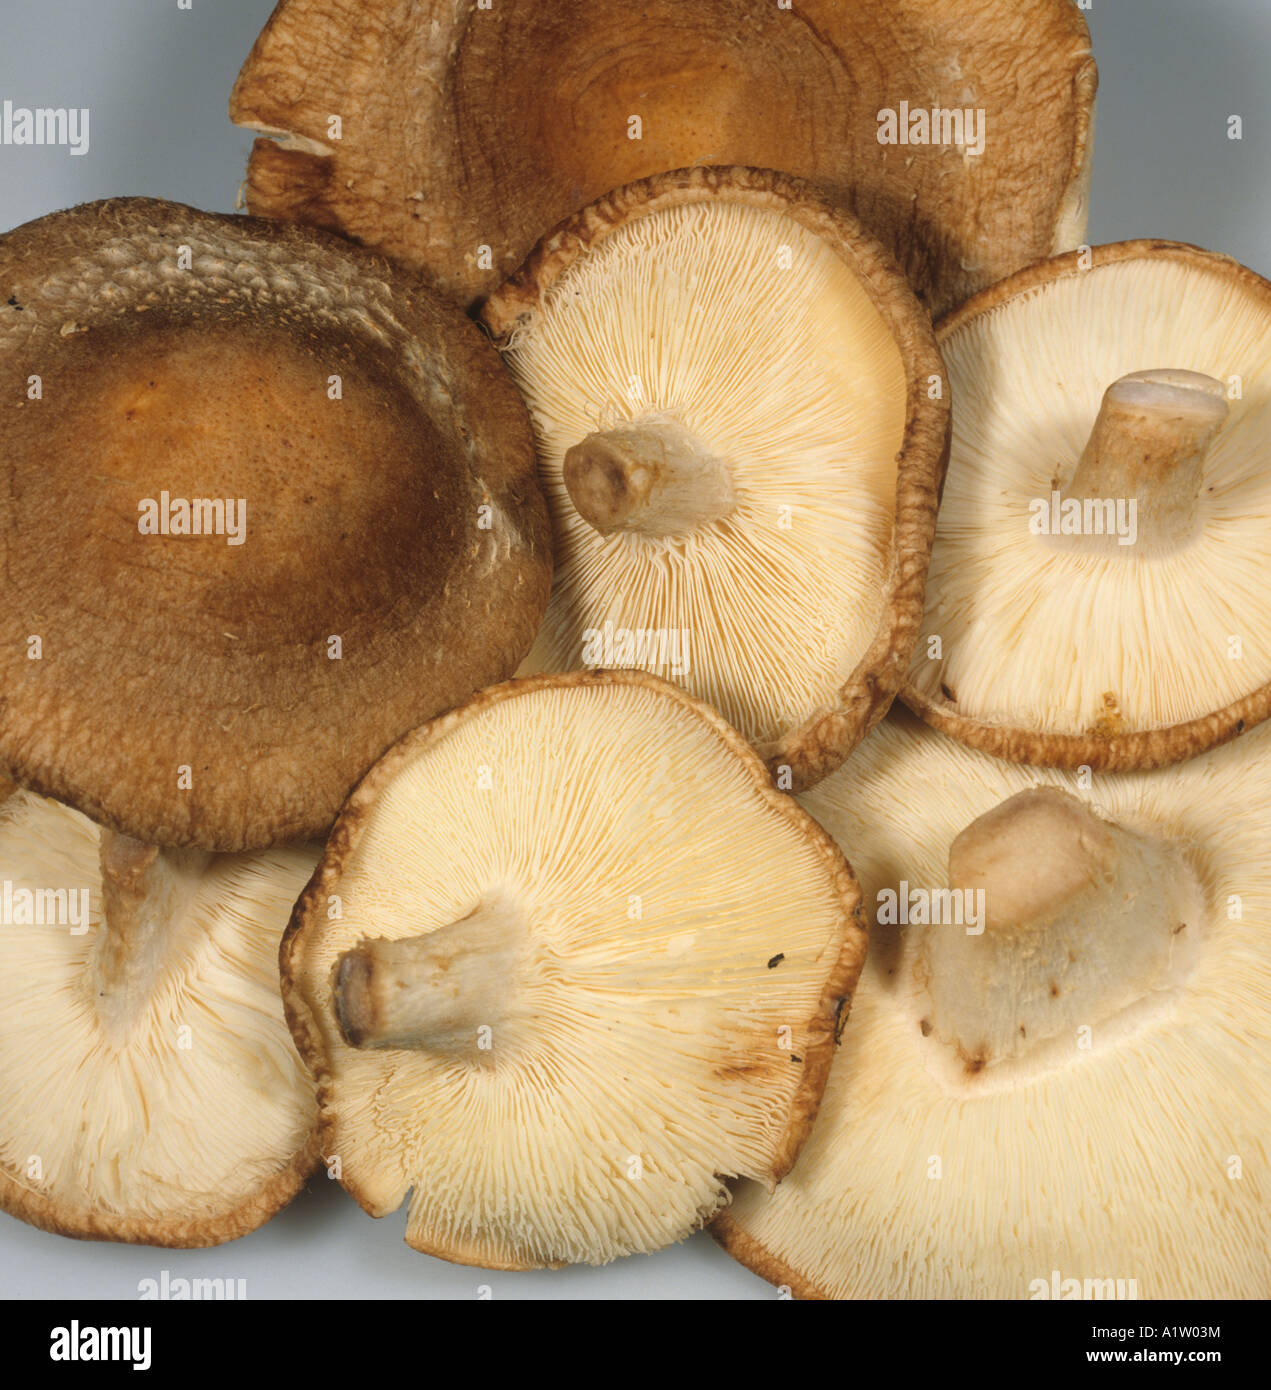 Shiitake mushroom Lentinus edodes edible fungi caps shop bought Stock Photo